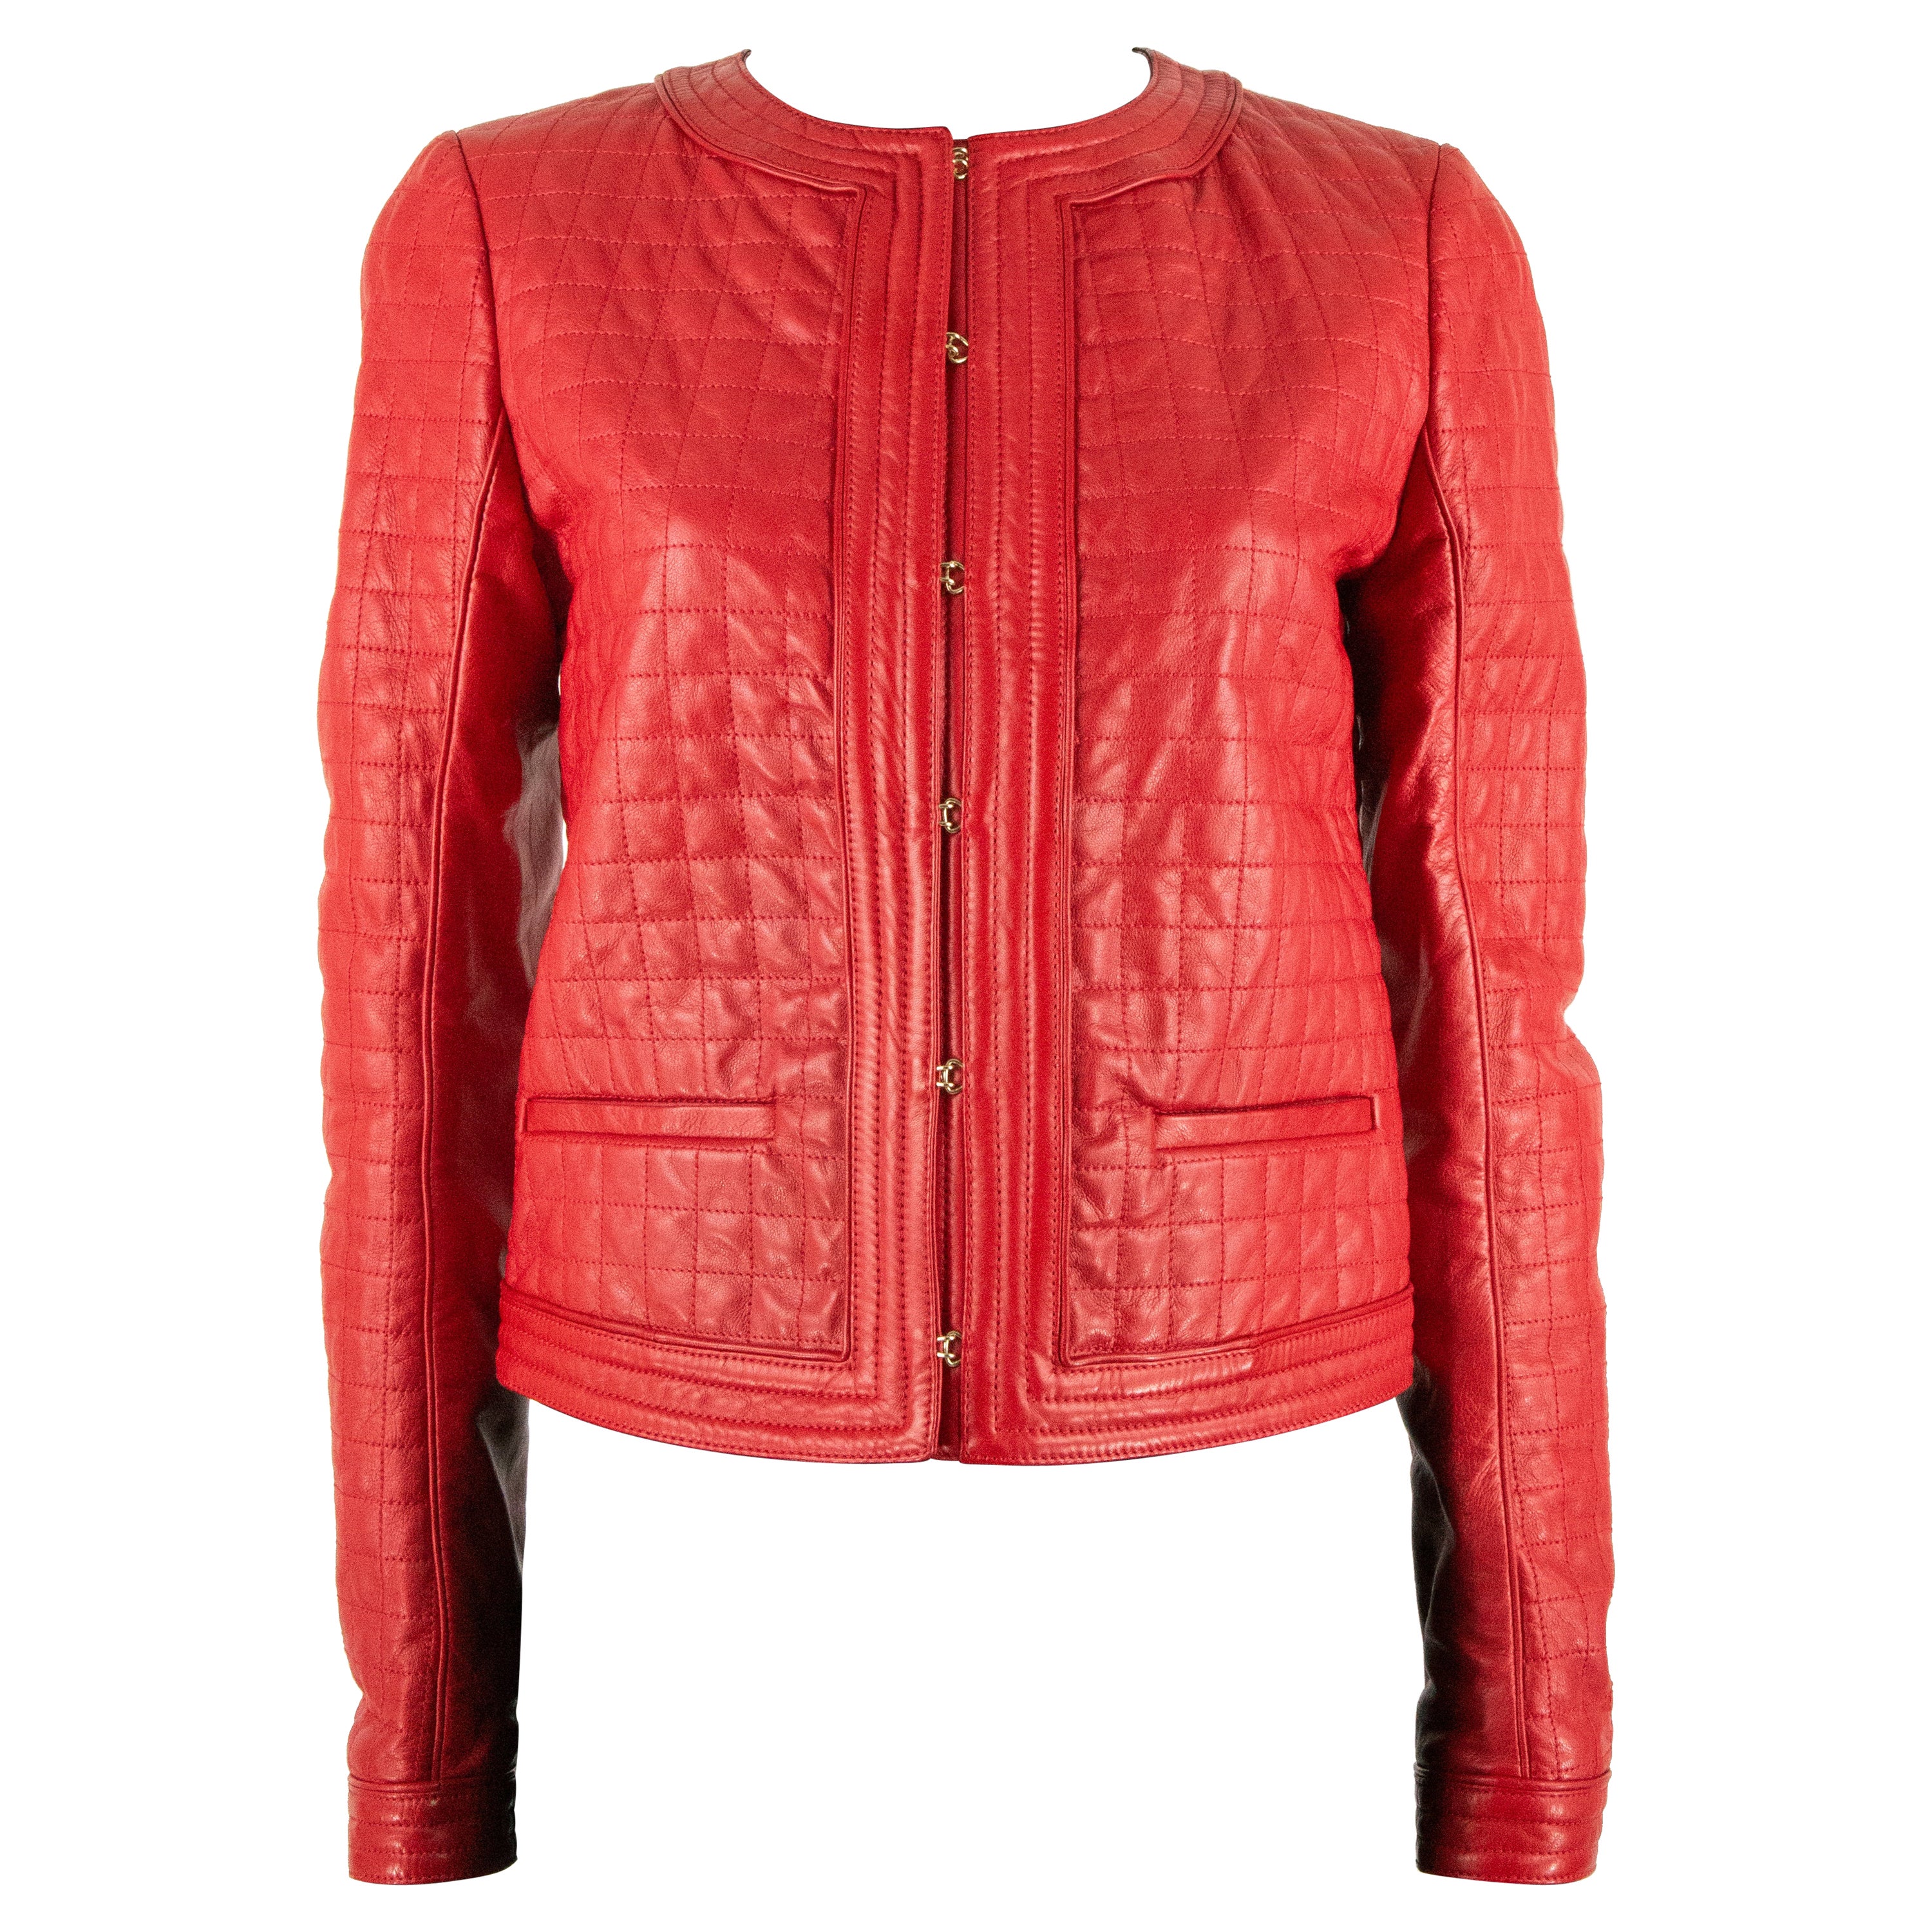 Roberto Cavalli Red Leather Jacket